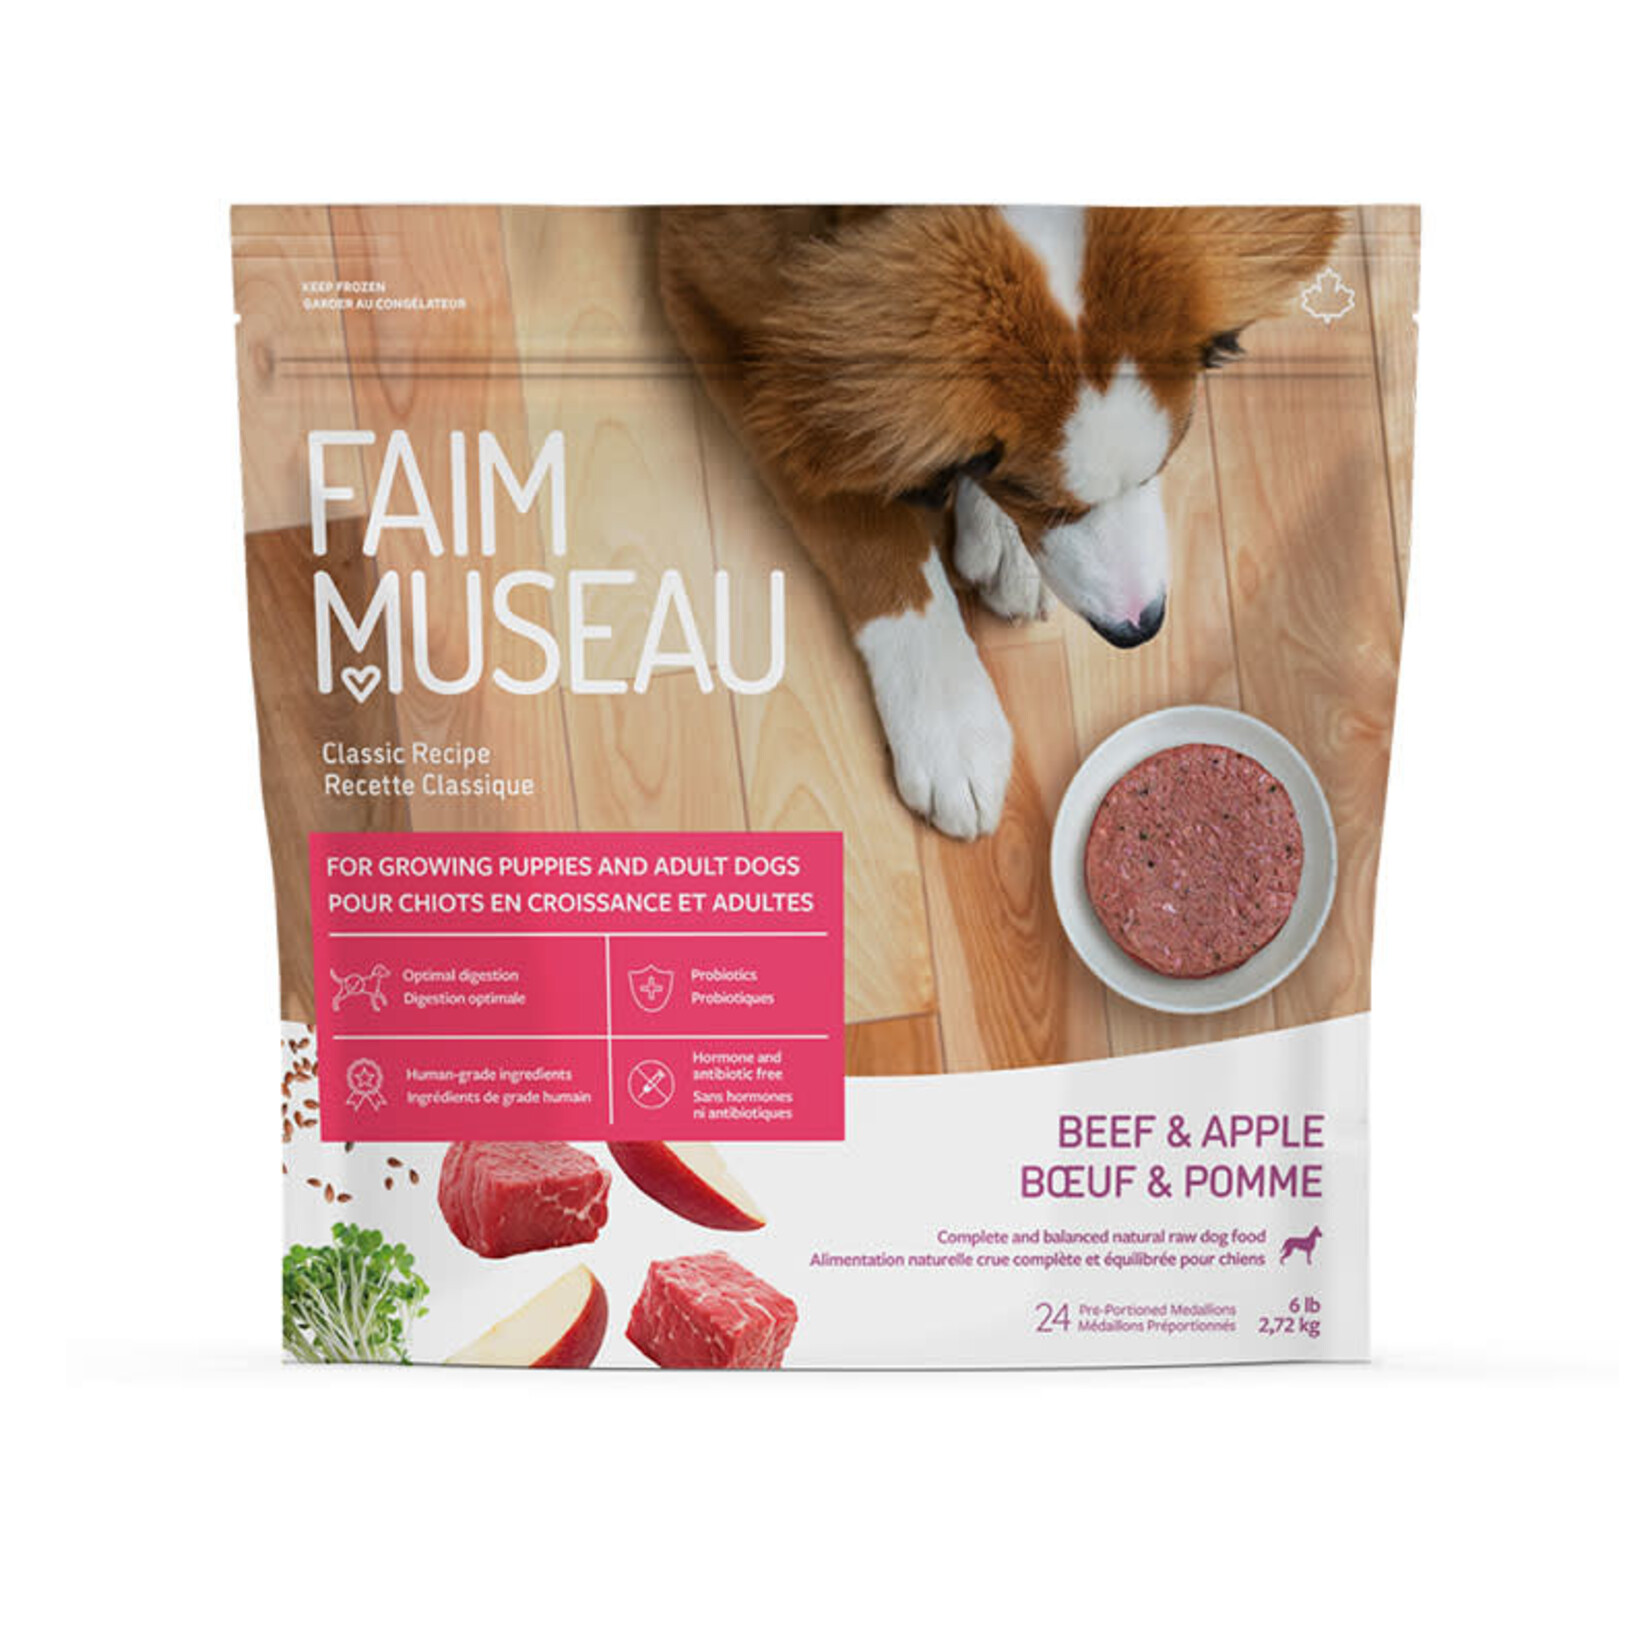 Faim Museau Faim Museau -Beef & Apple for Dogs - 6lb